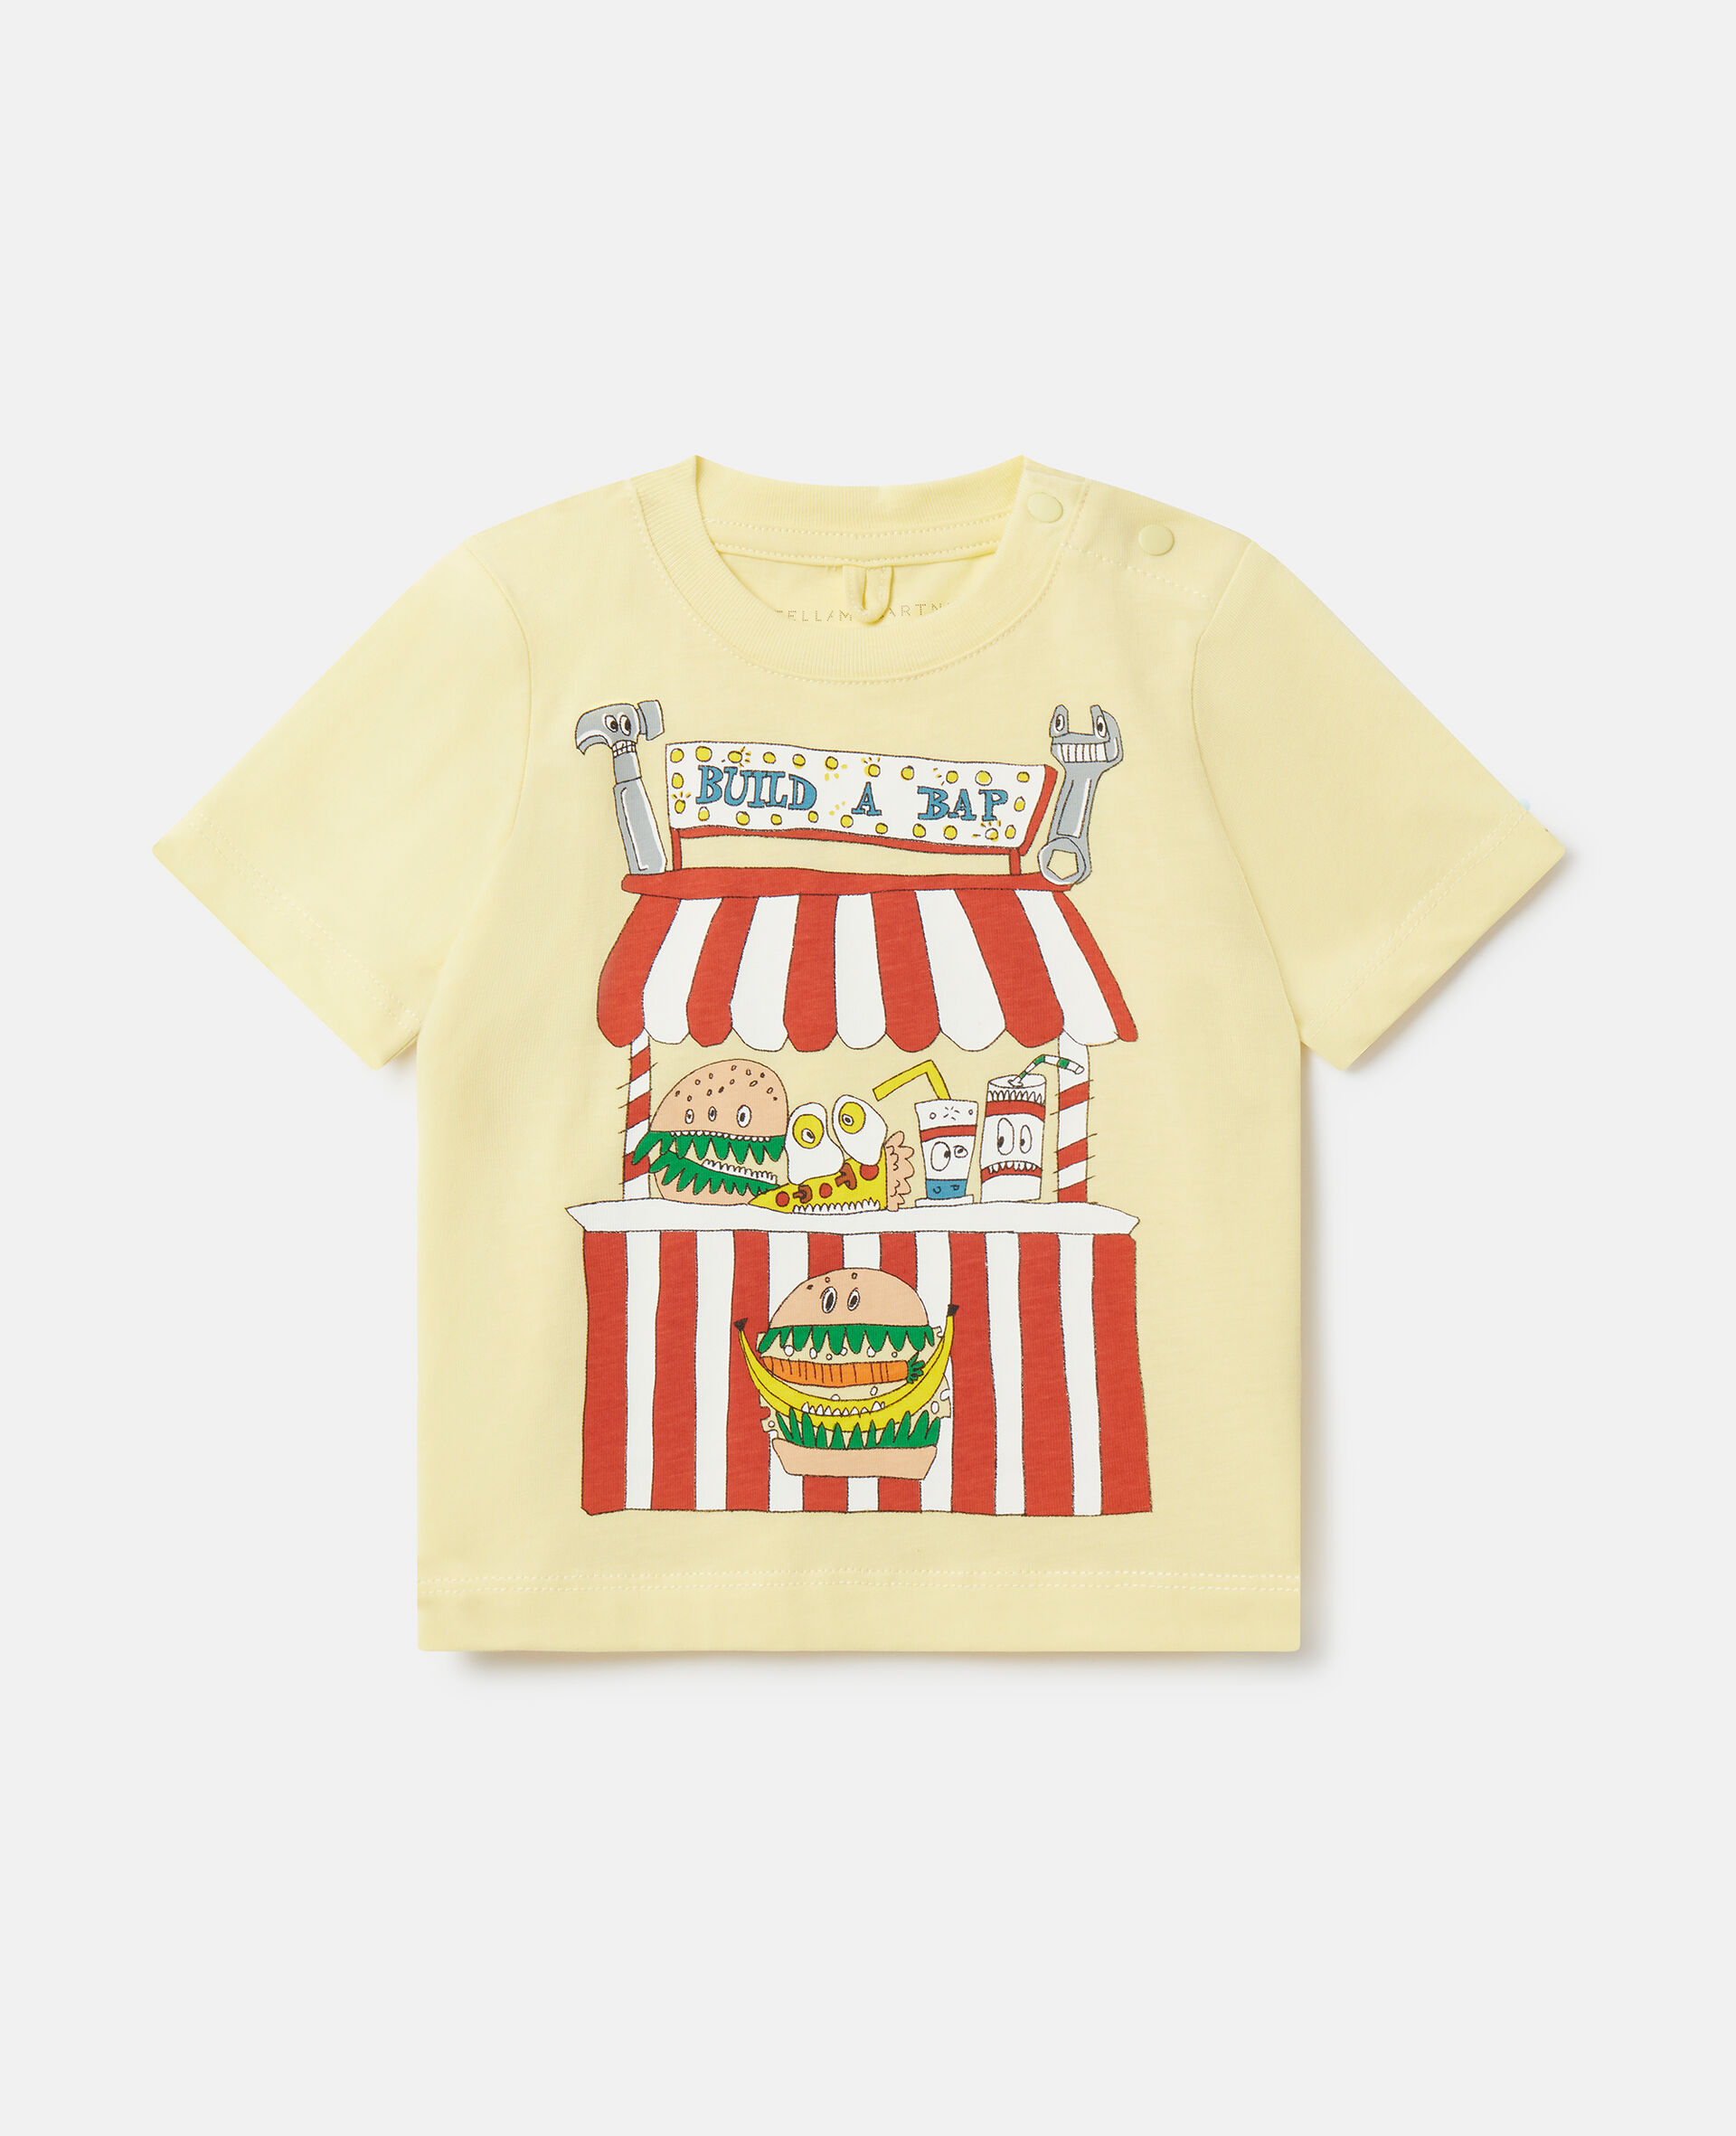 T-shirt à imprimé stand « Build A Bap »-Fantaisie-medium